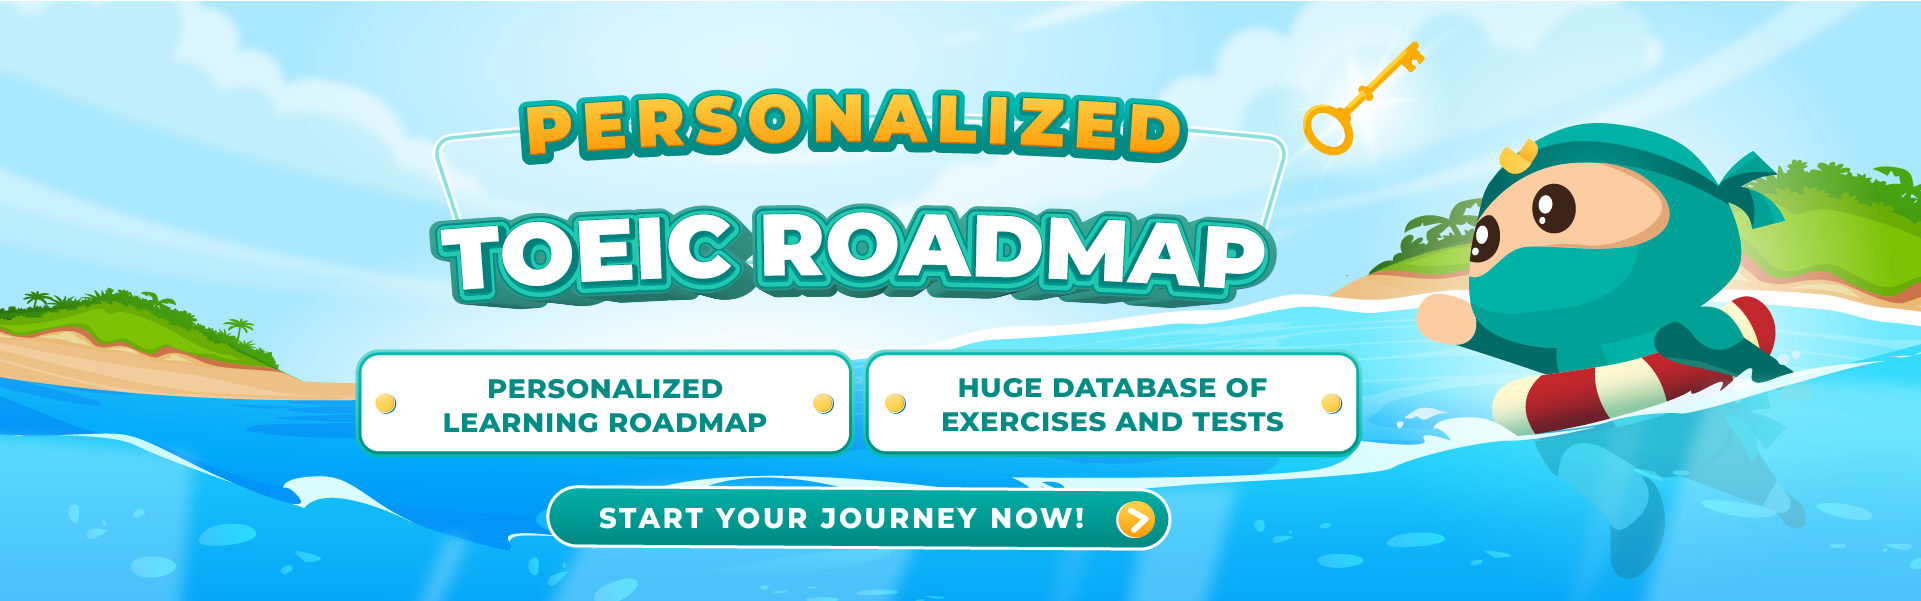 Personalized TOEIC roadmap